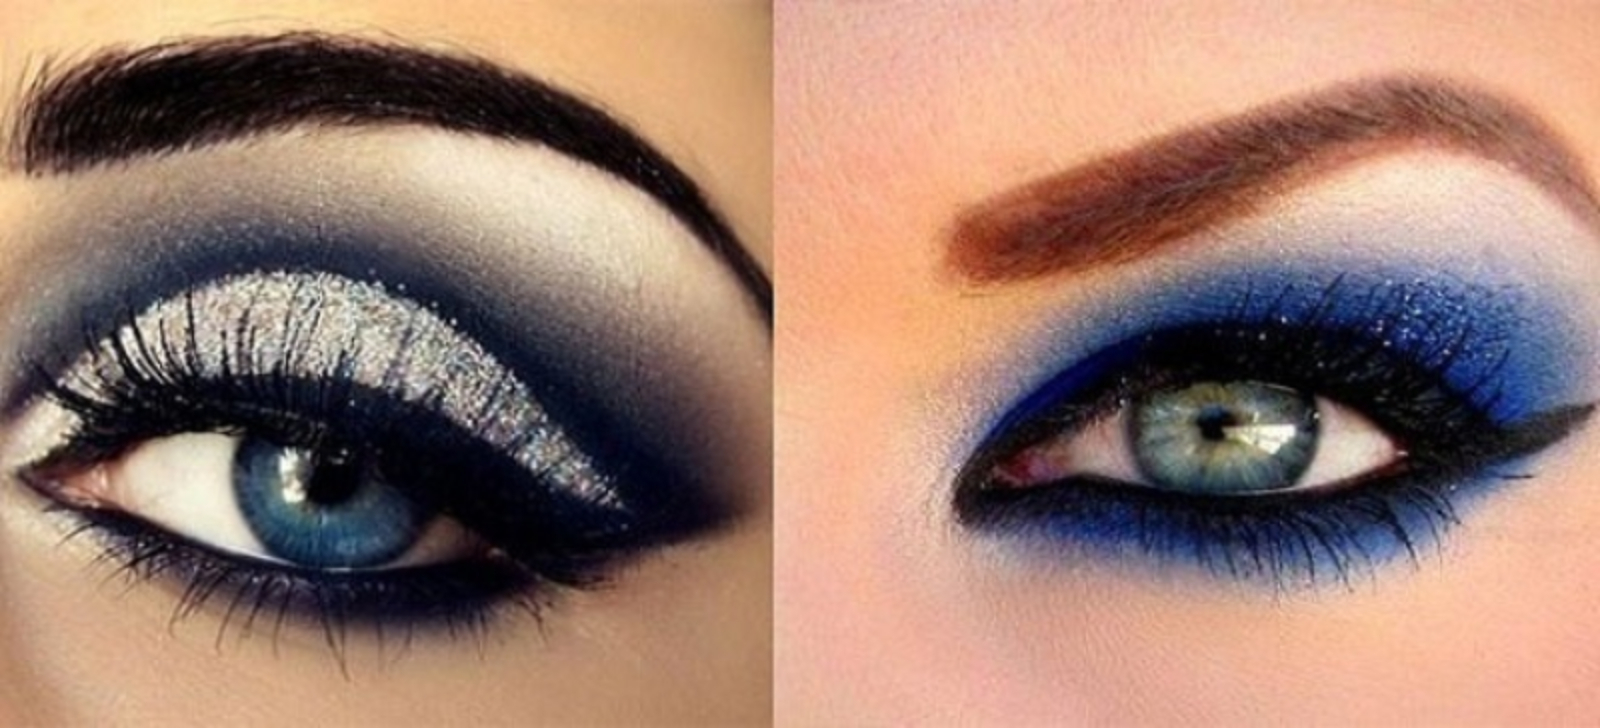 Eye Makeup Ideas For Blue Eyes 5 Eye Makeup Ideas For Blue Eyes Eye Makeup With Tips Tutorials